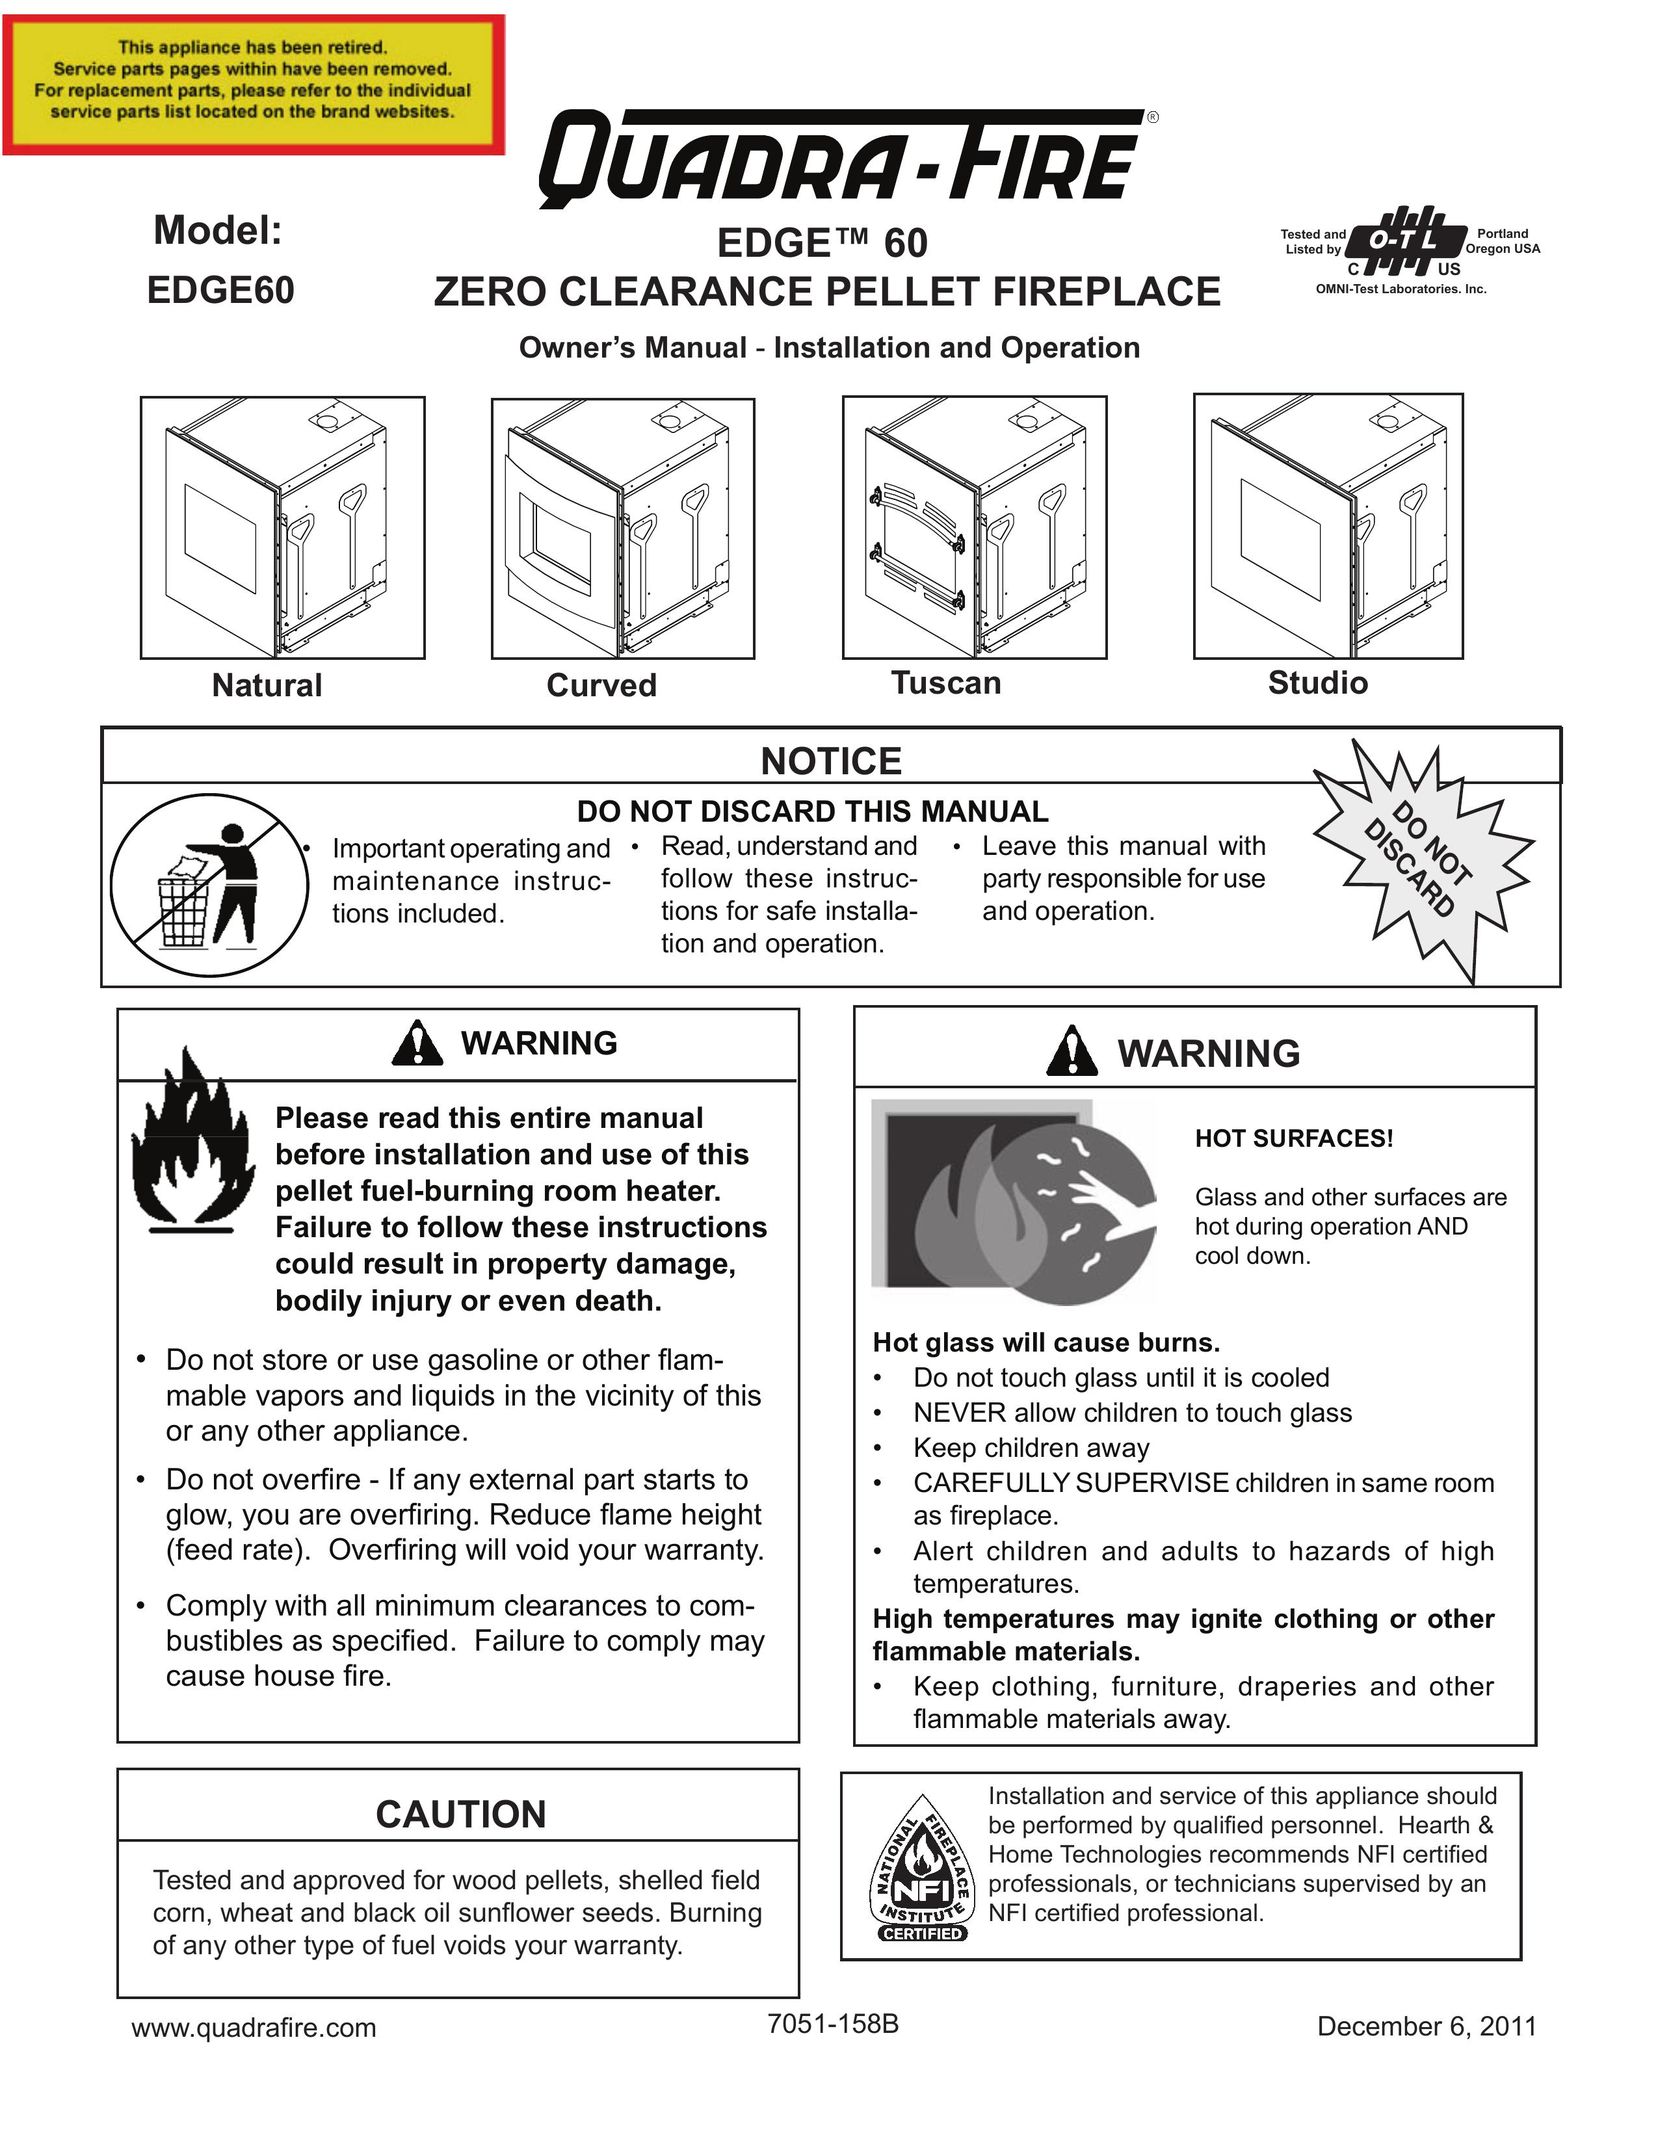 Quadra-Fire 7051-158B Indoor Fireplace User Manual